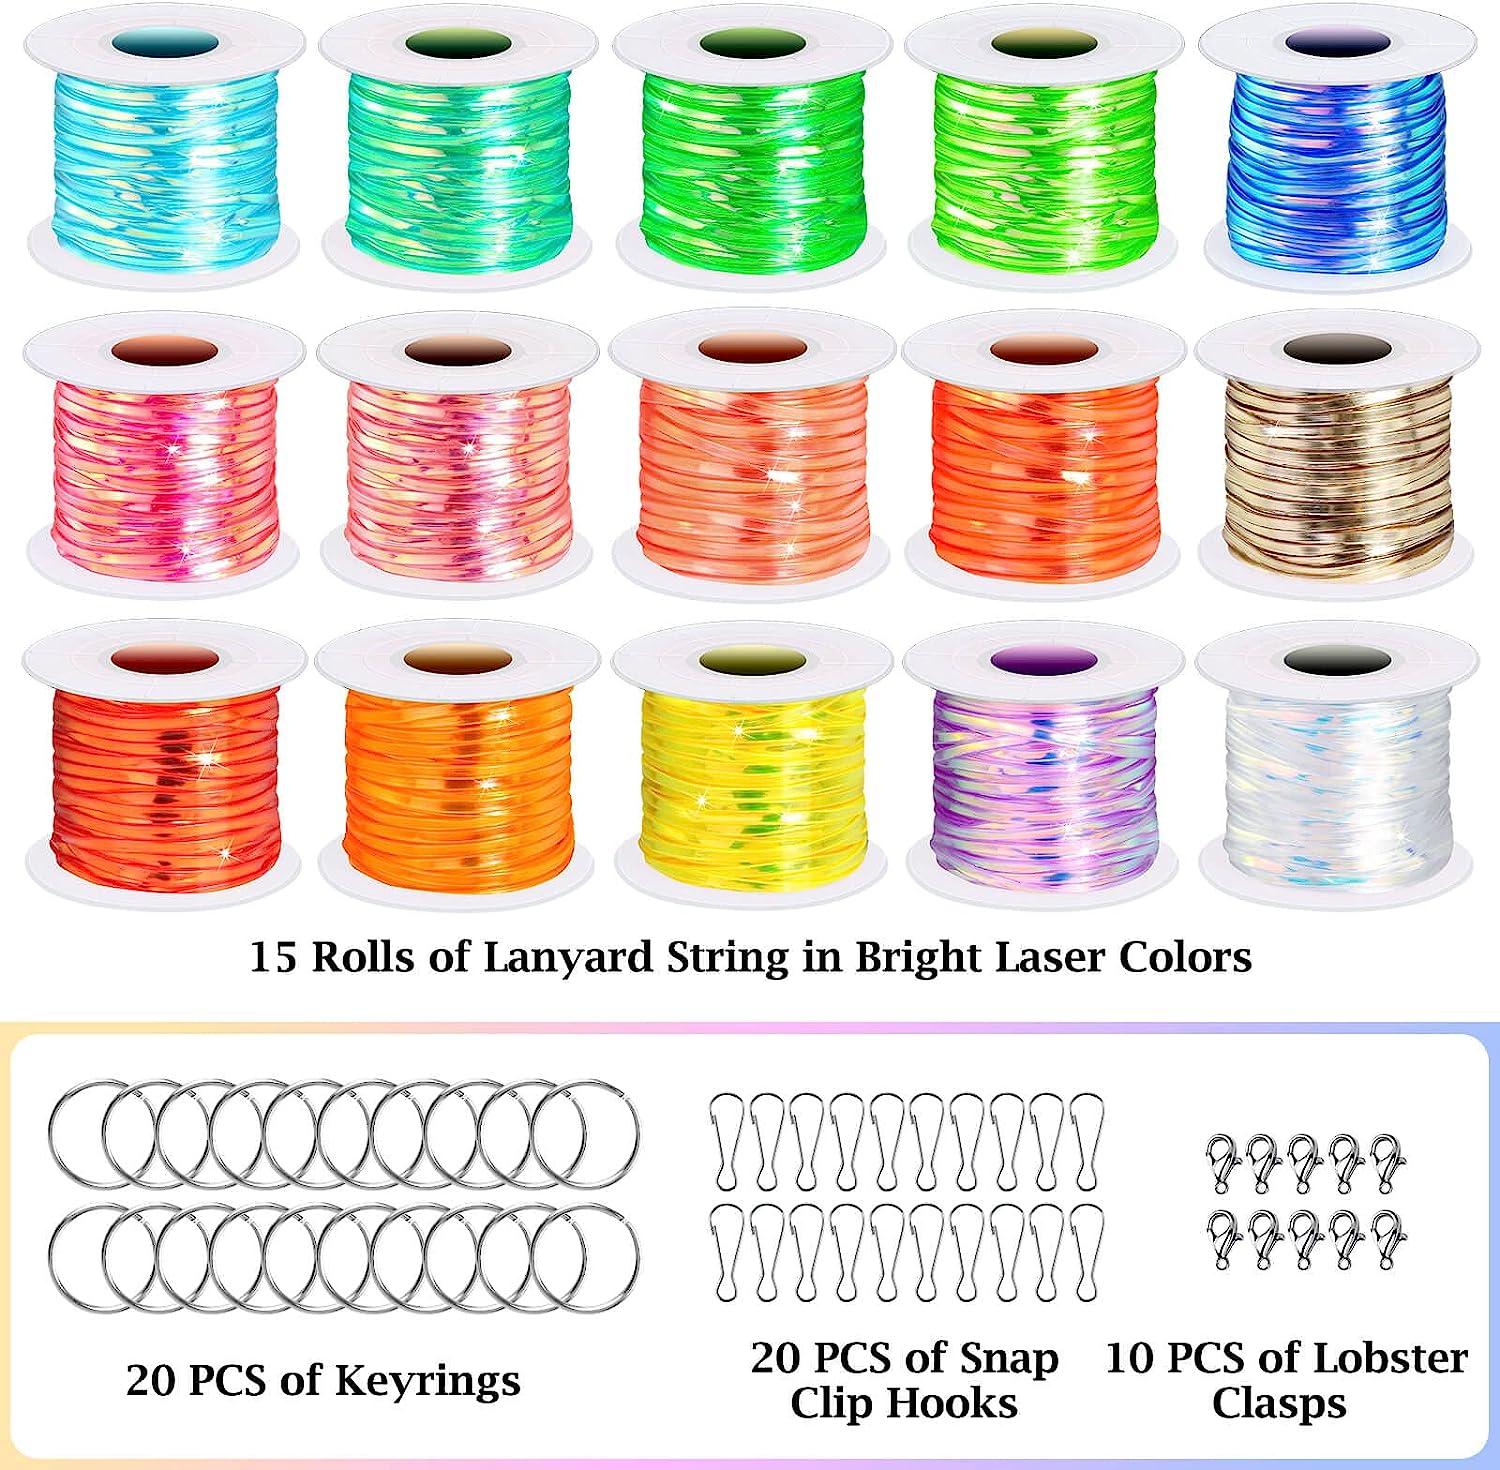  Lanyard String Kit, Cridoz 6Pack Plastic Lacing Cord Gimp  String Lanyard Weaving Kit for Bracelets, Keychains, Crafts